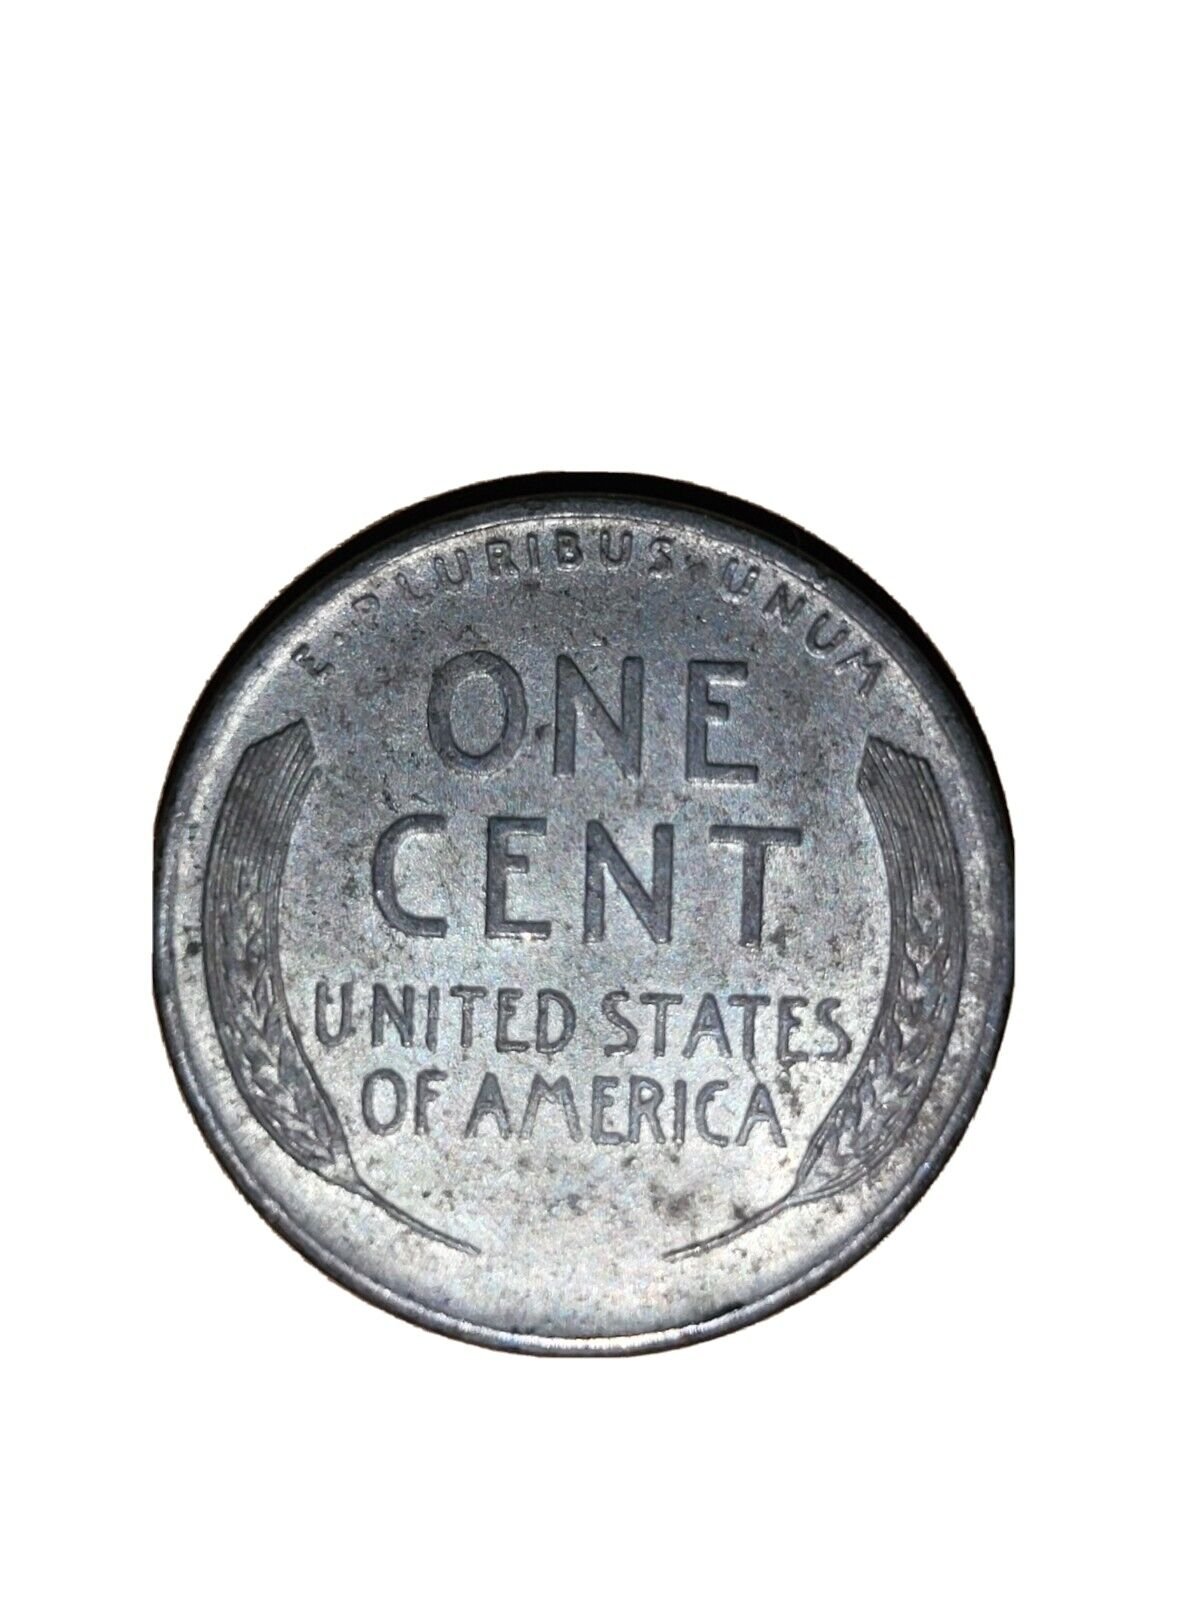 2-steel coins.jpeg